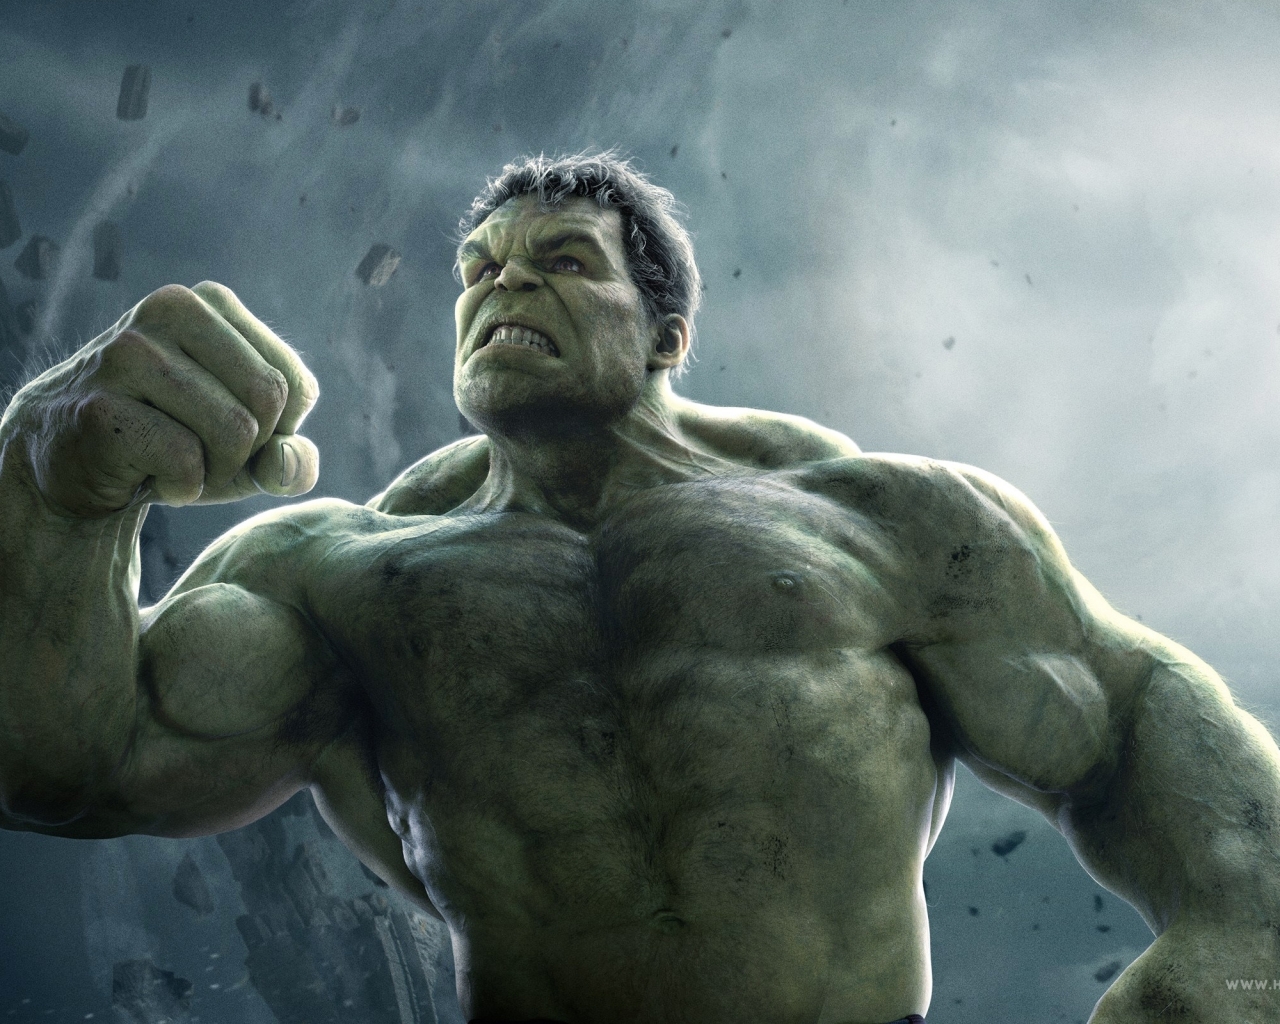 Fondos de pantalla Hulk en Avengers Age of Ultron HD 1280x1024 1272